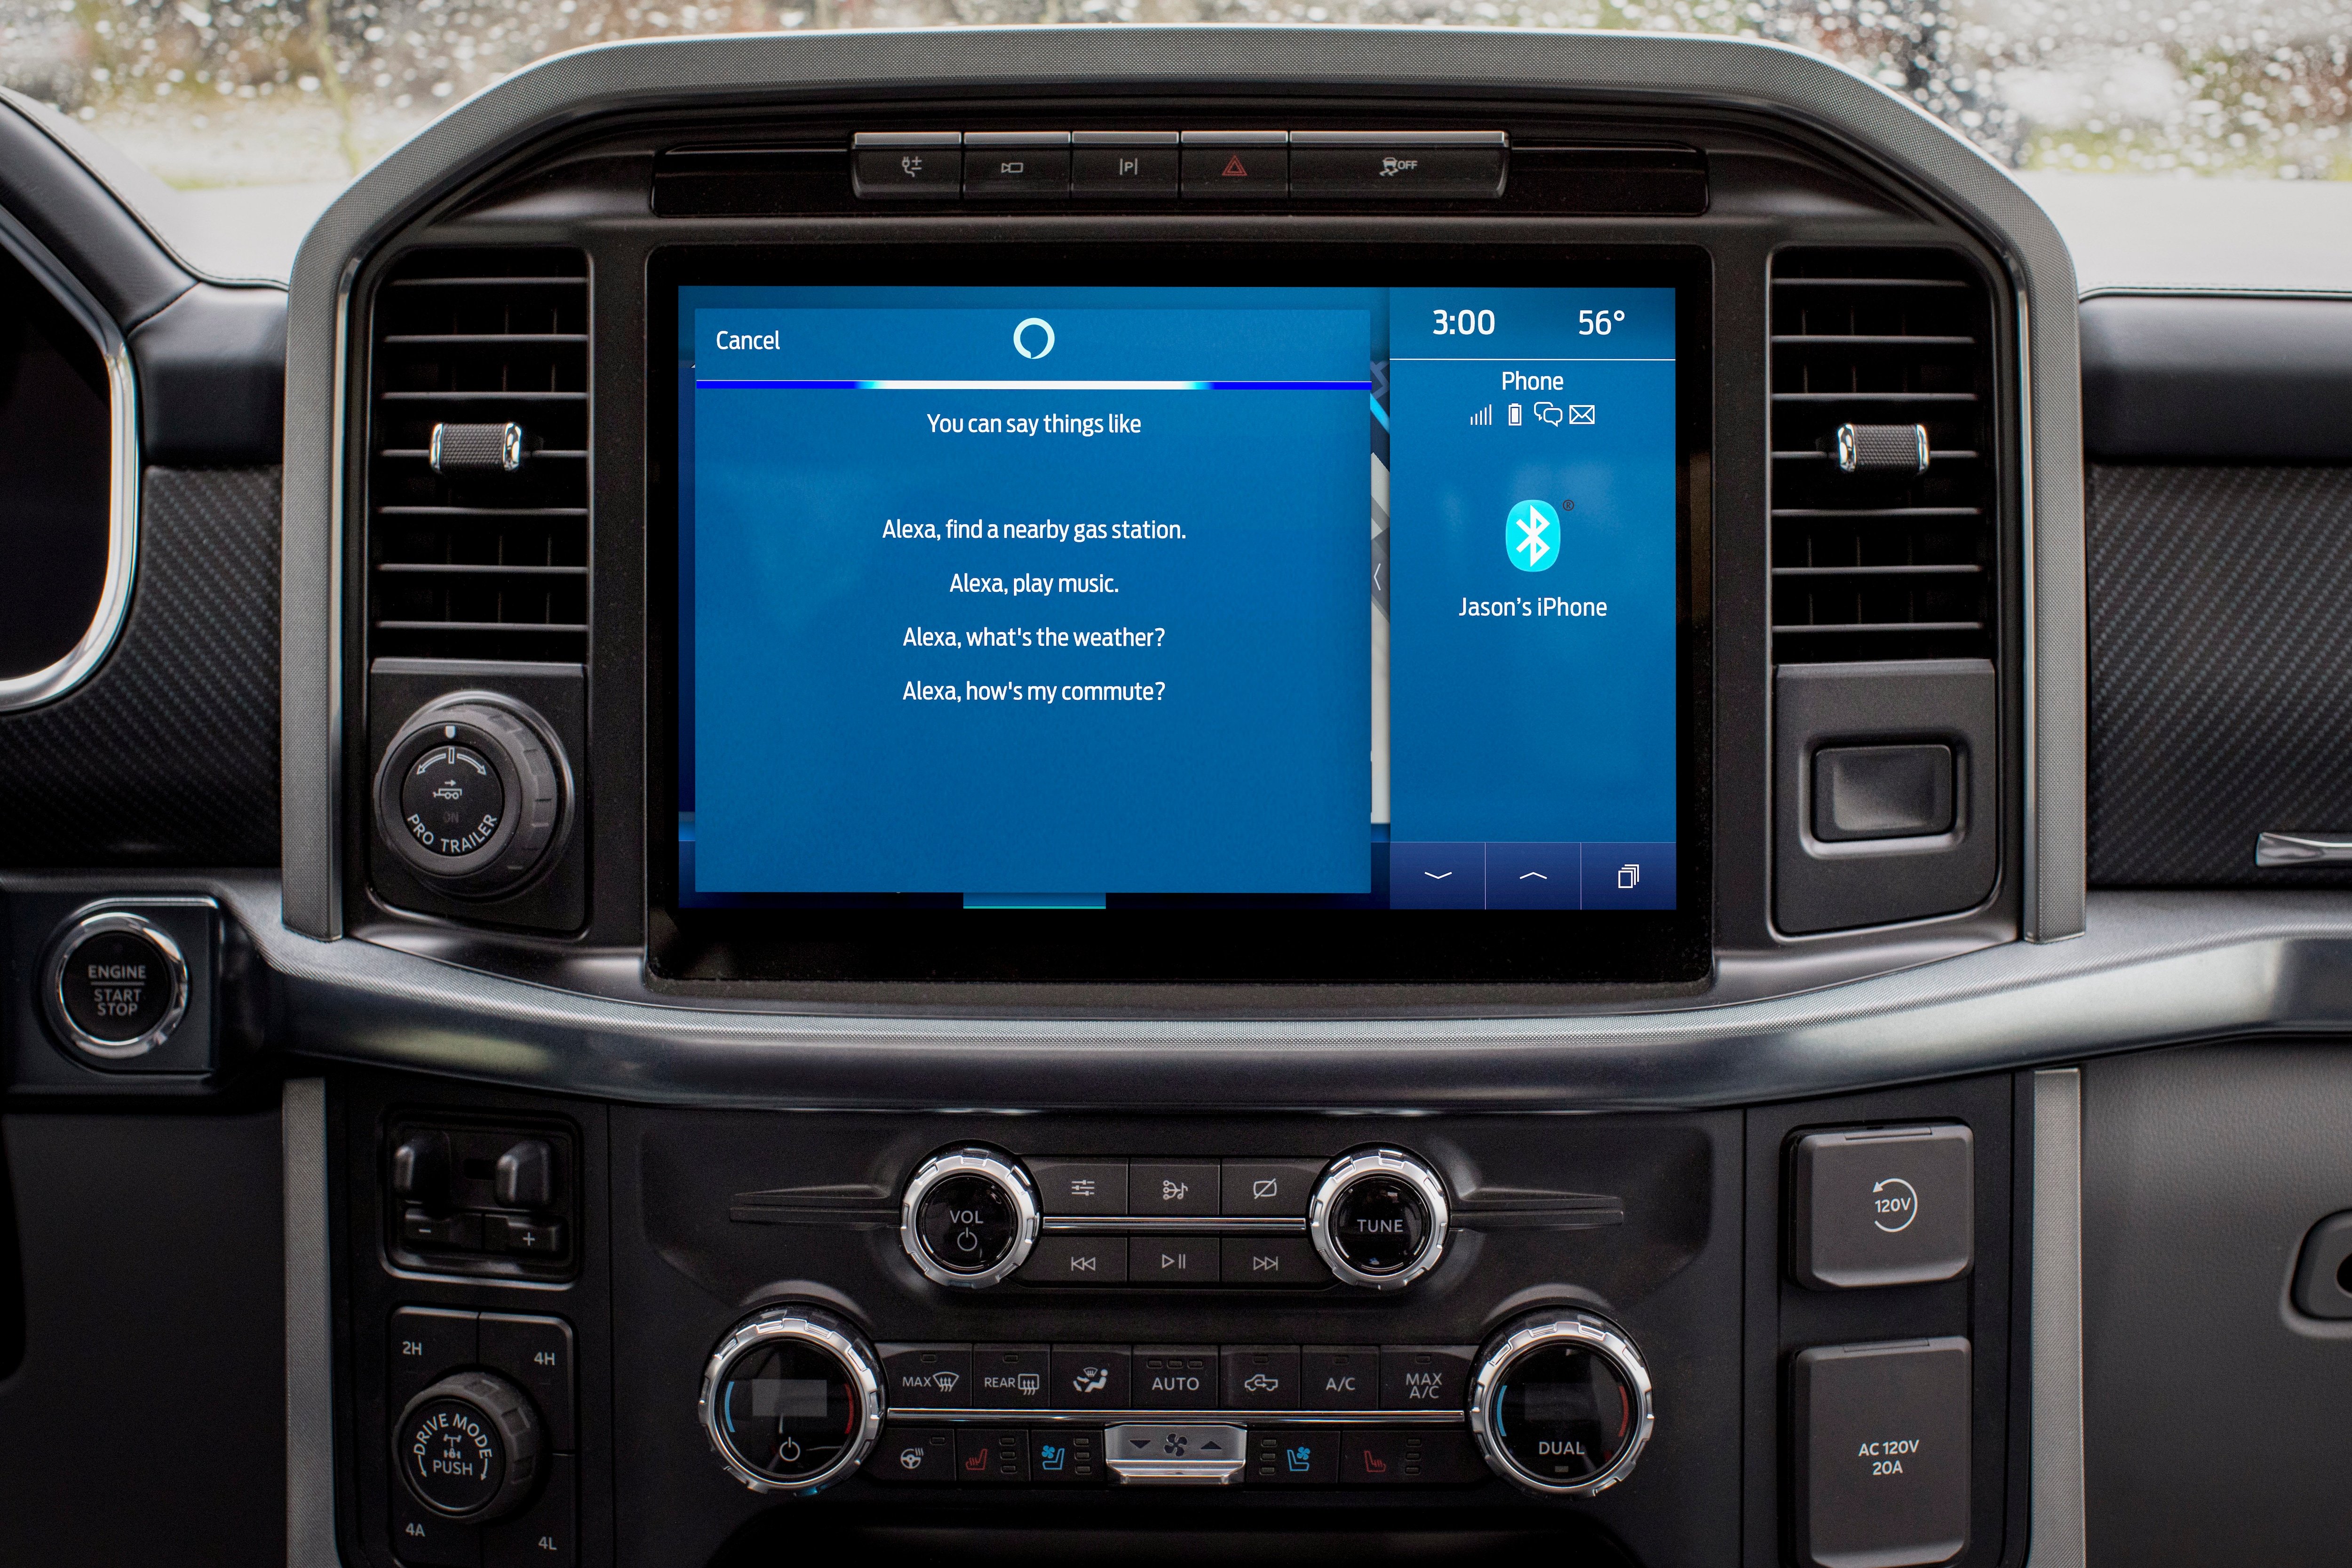 Alexa Auto Mode enhances in-vehicle voice experience